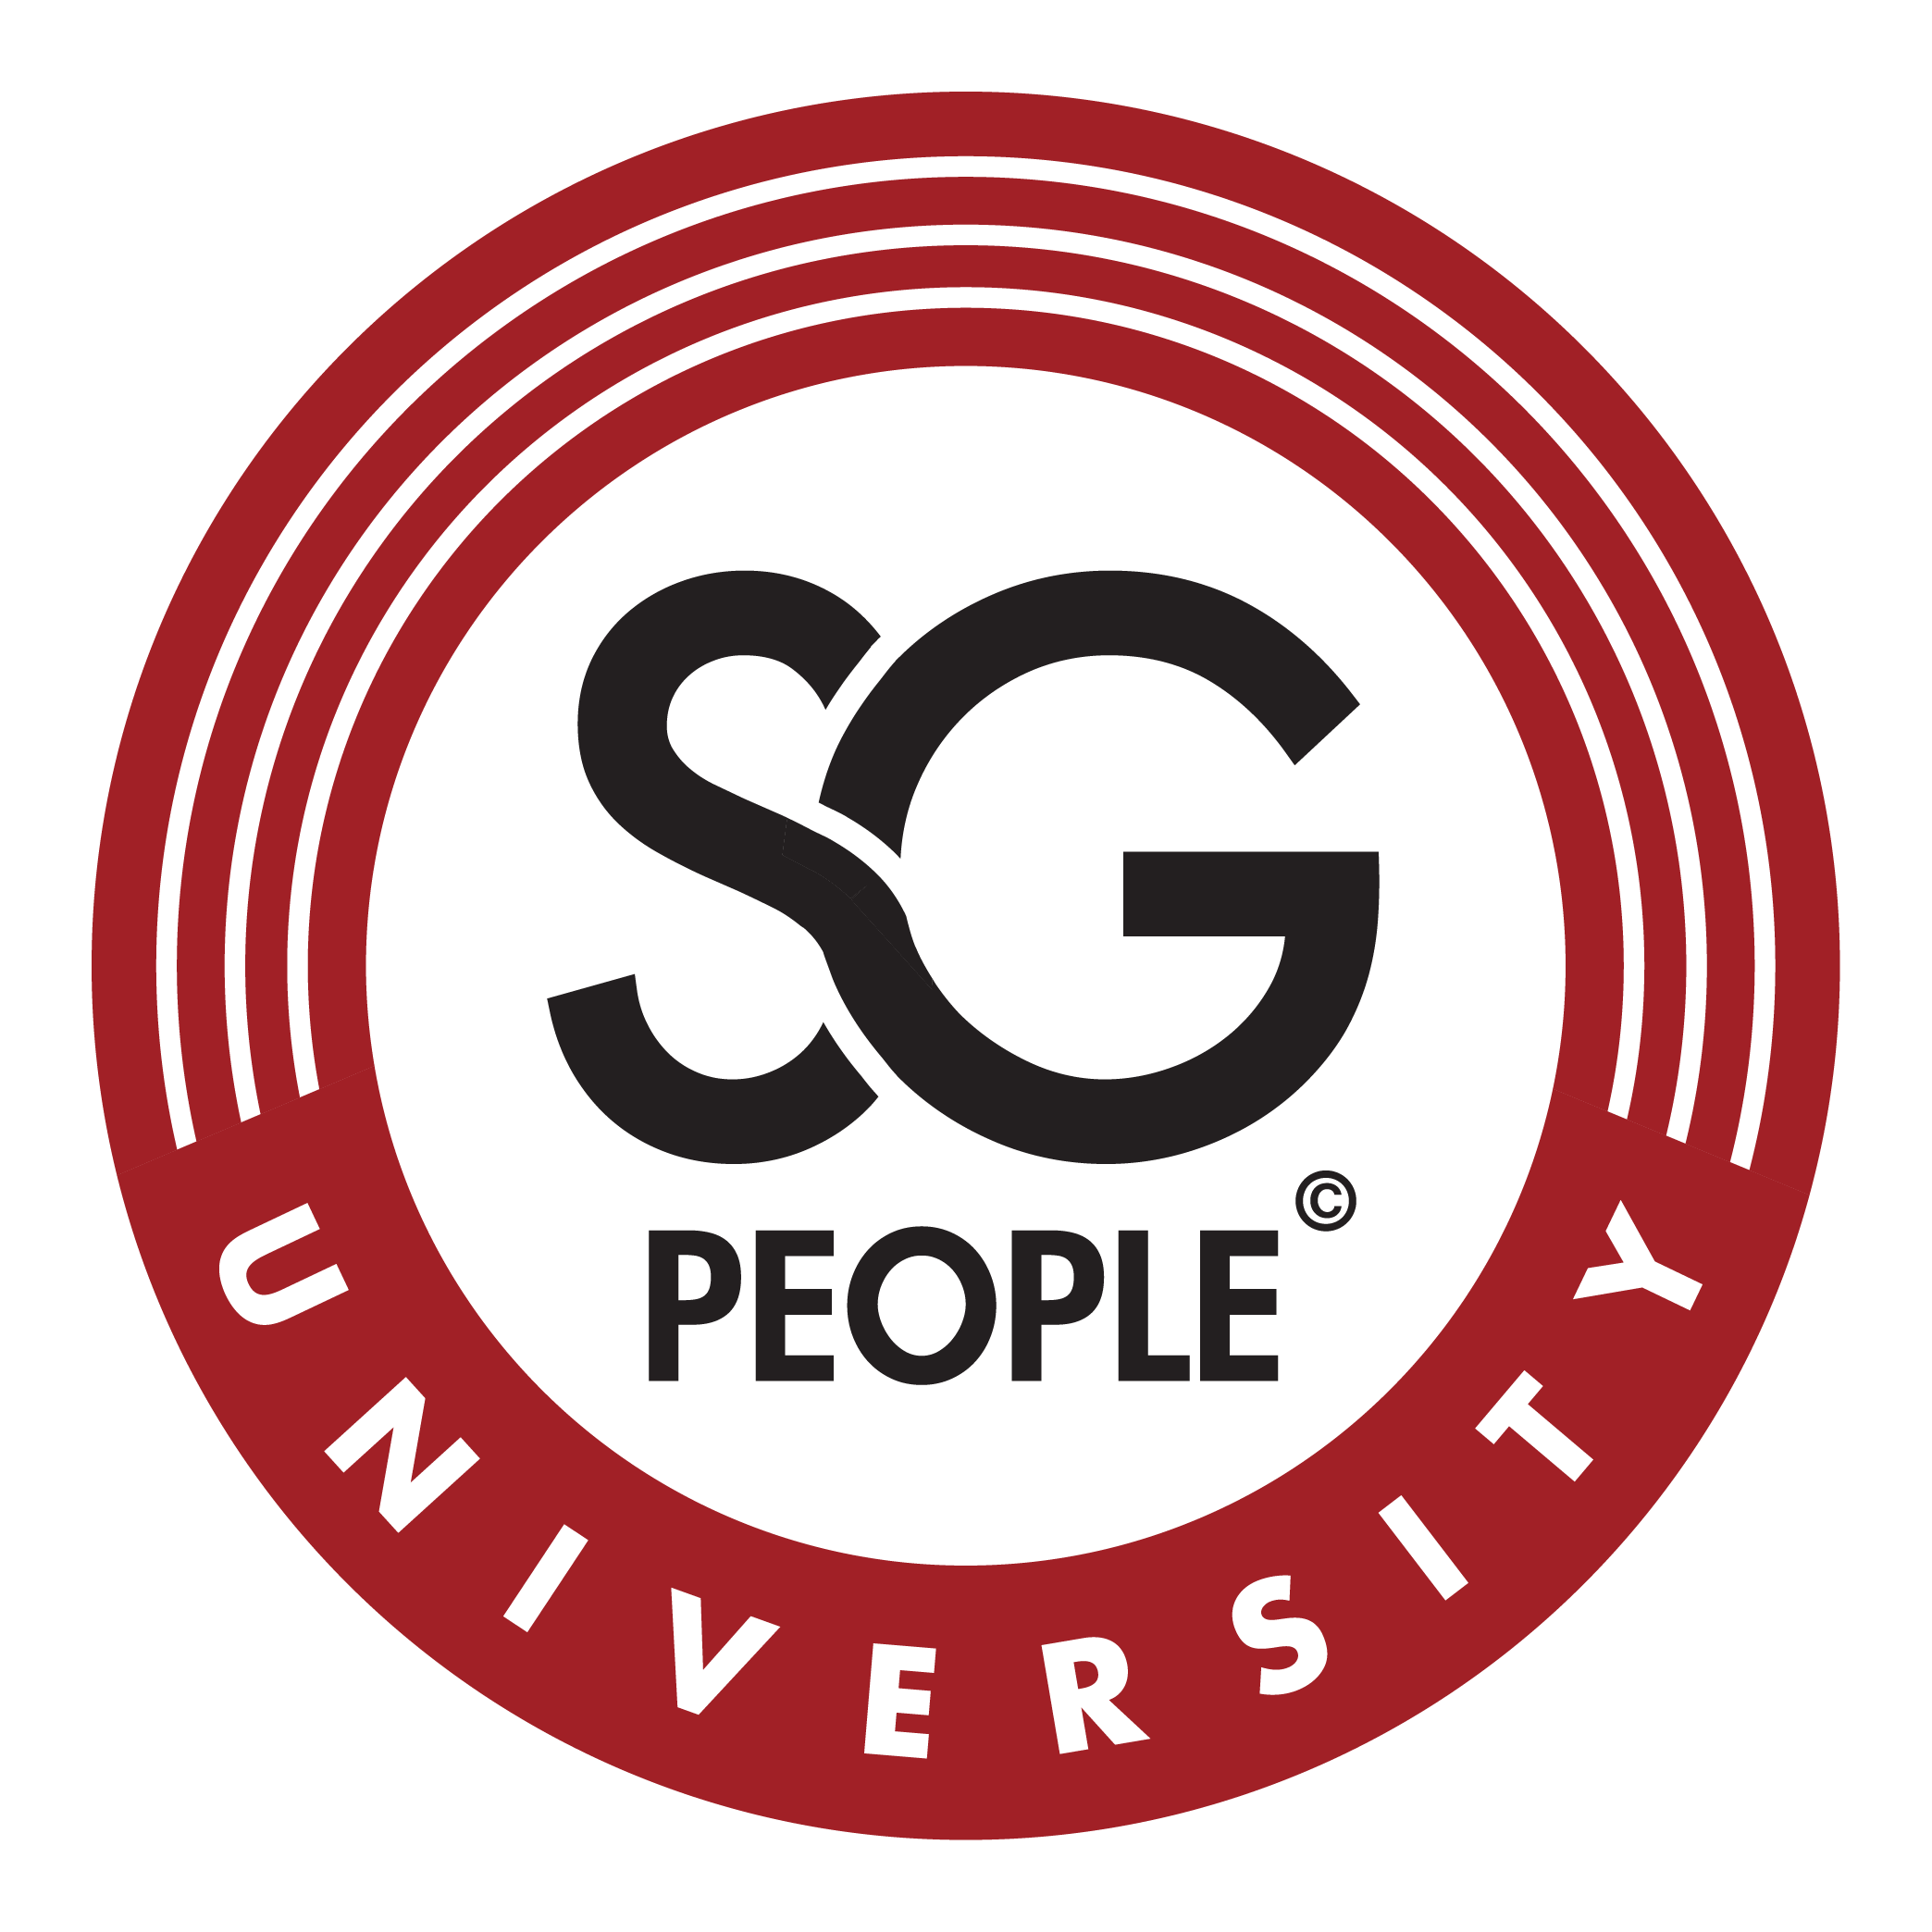 SG People University